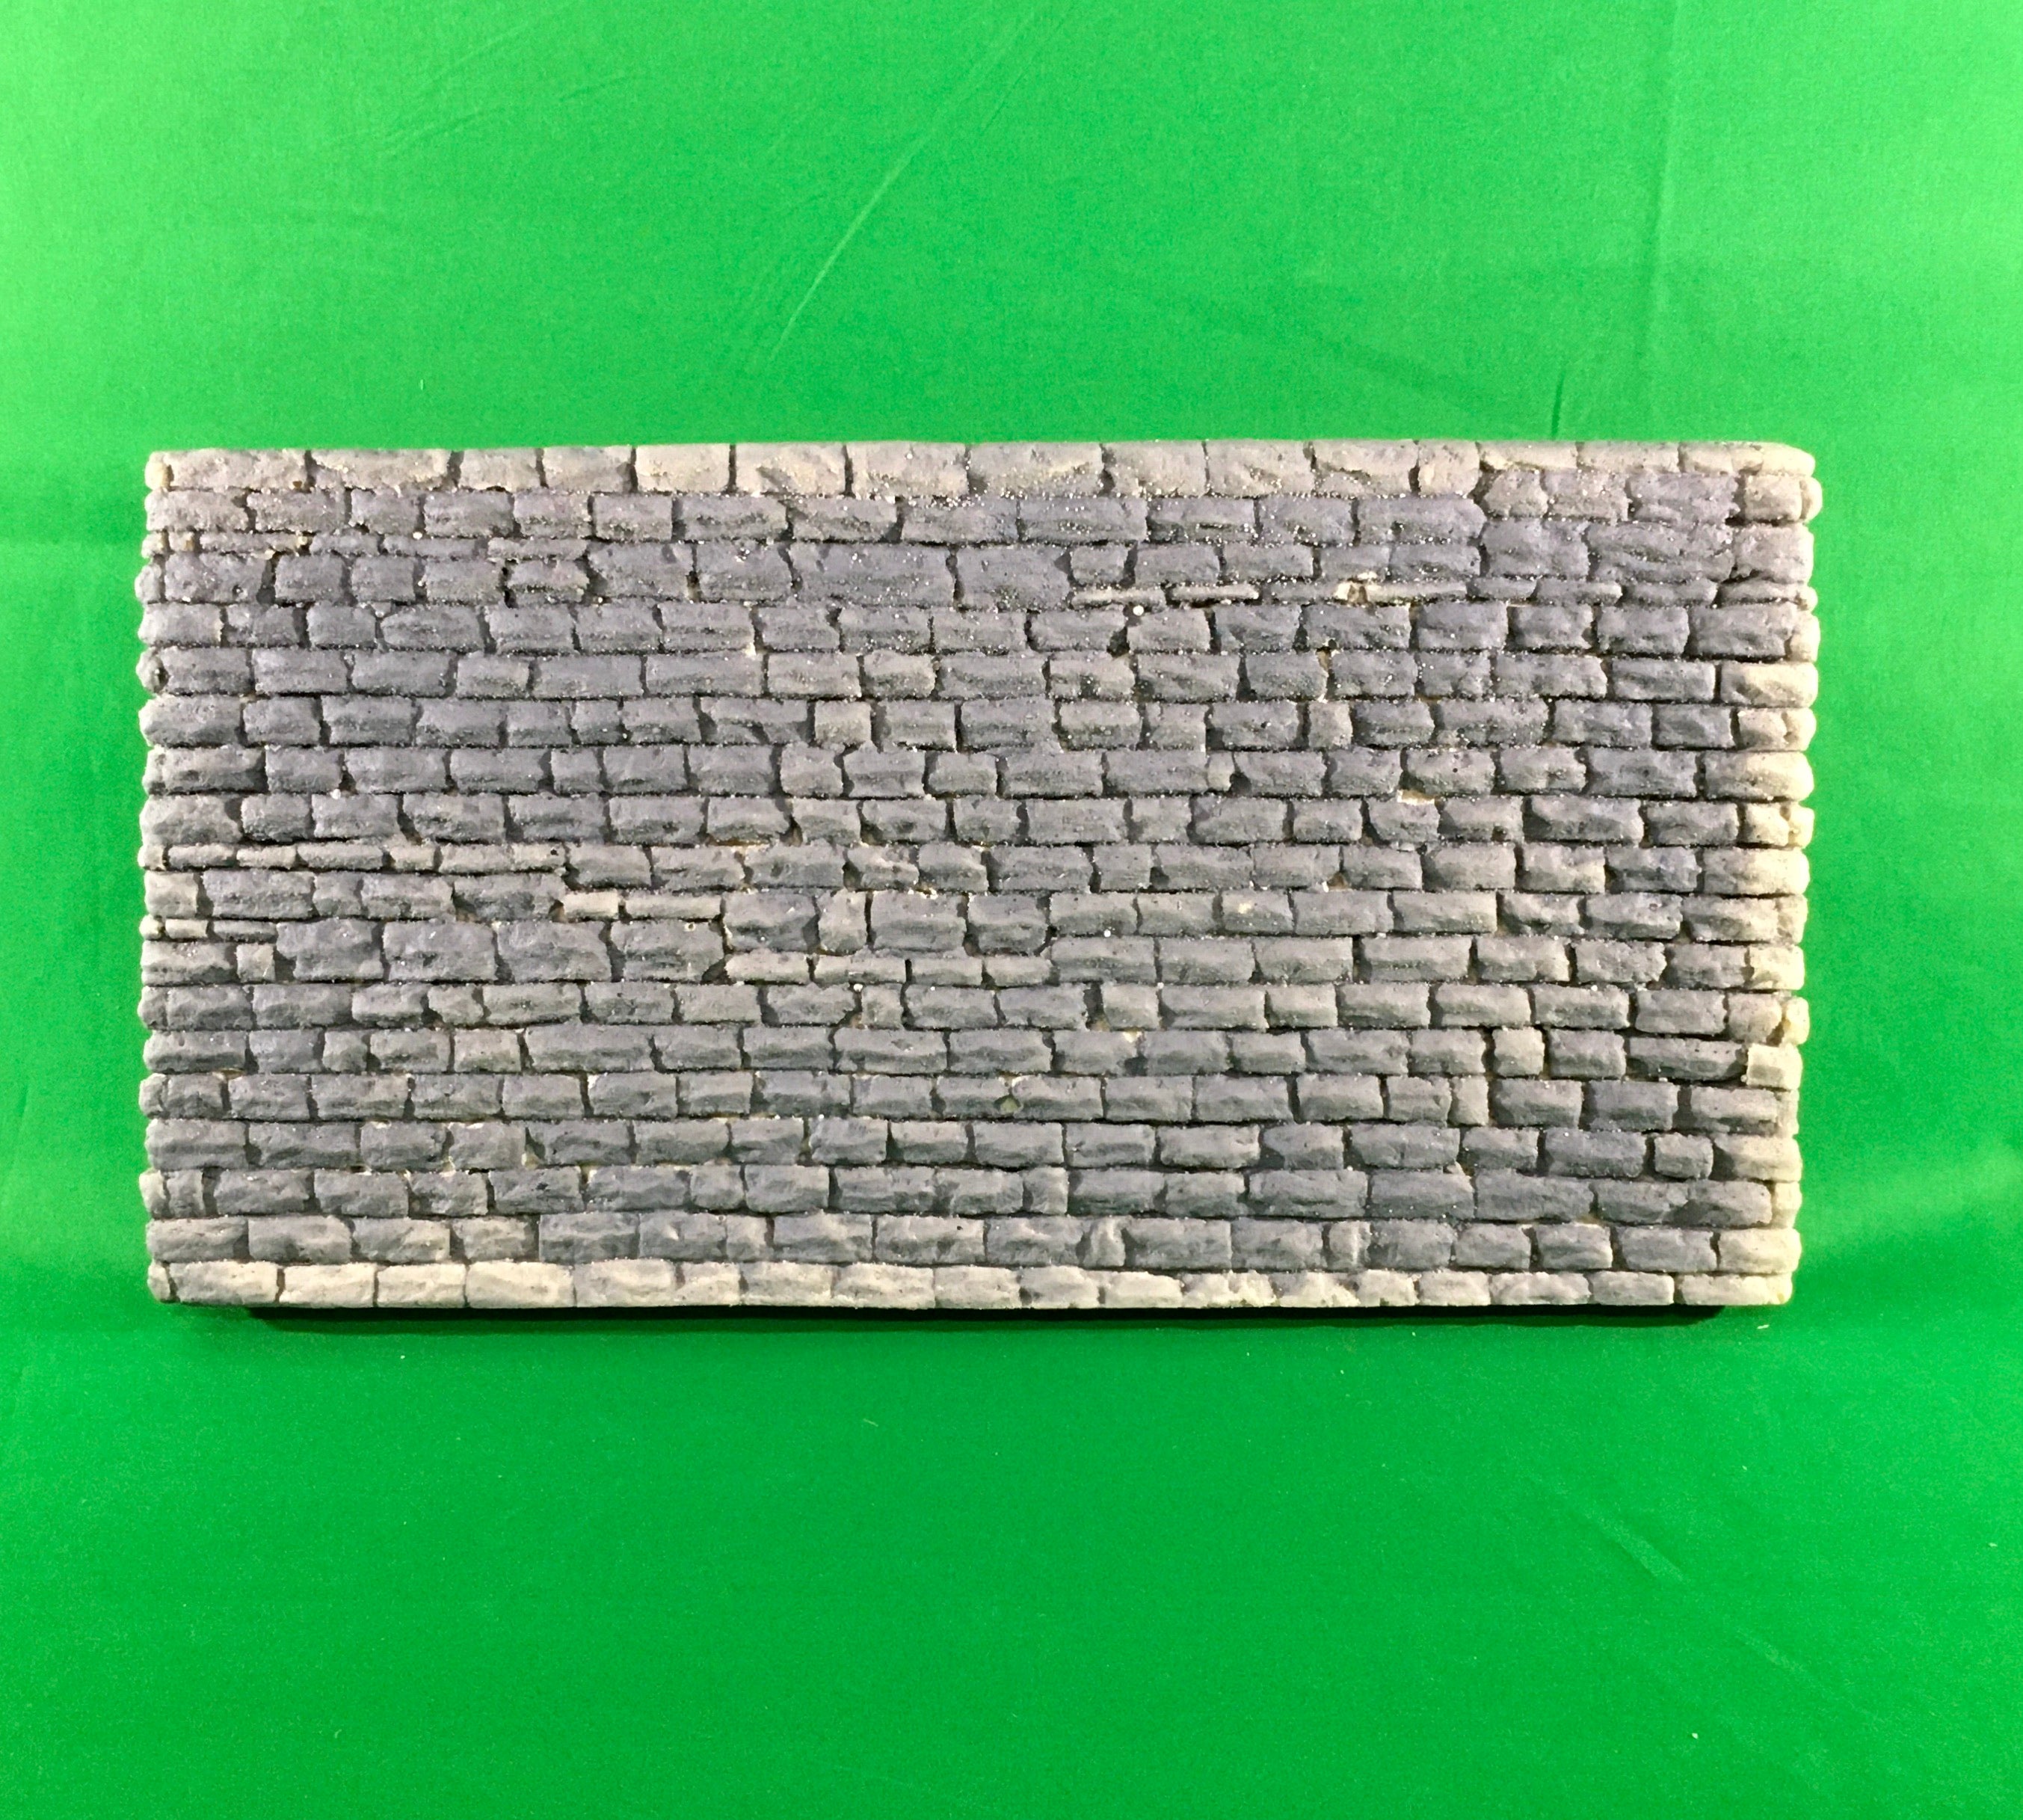 Atherton Scenics 6141 - "Thick" Profile Cut Block Wall